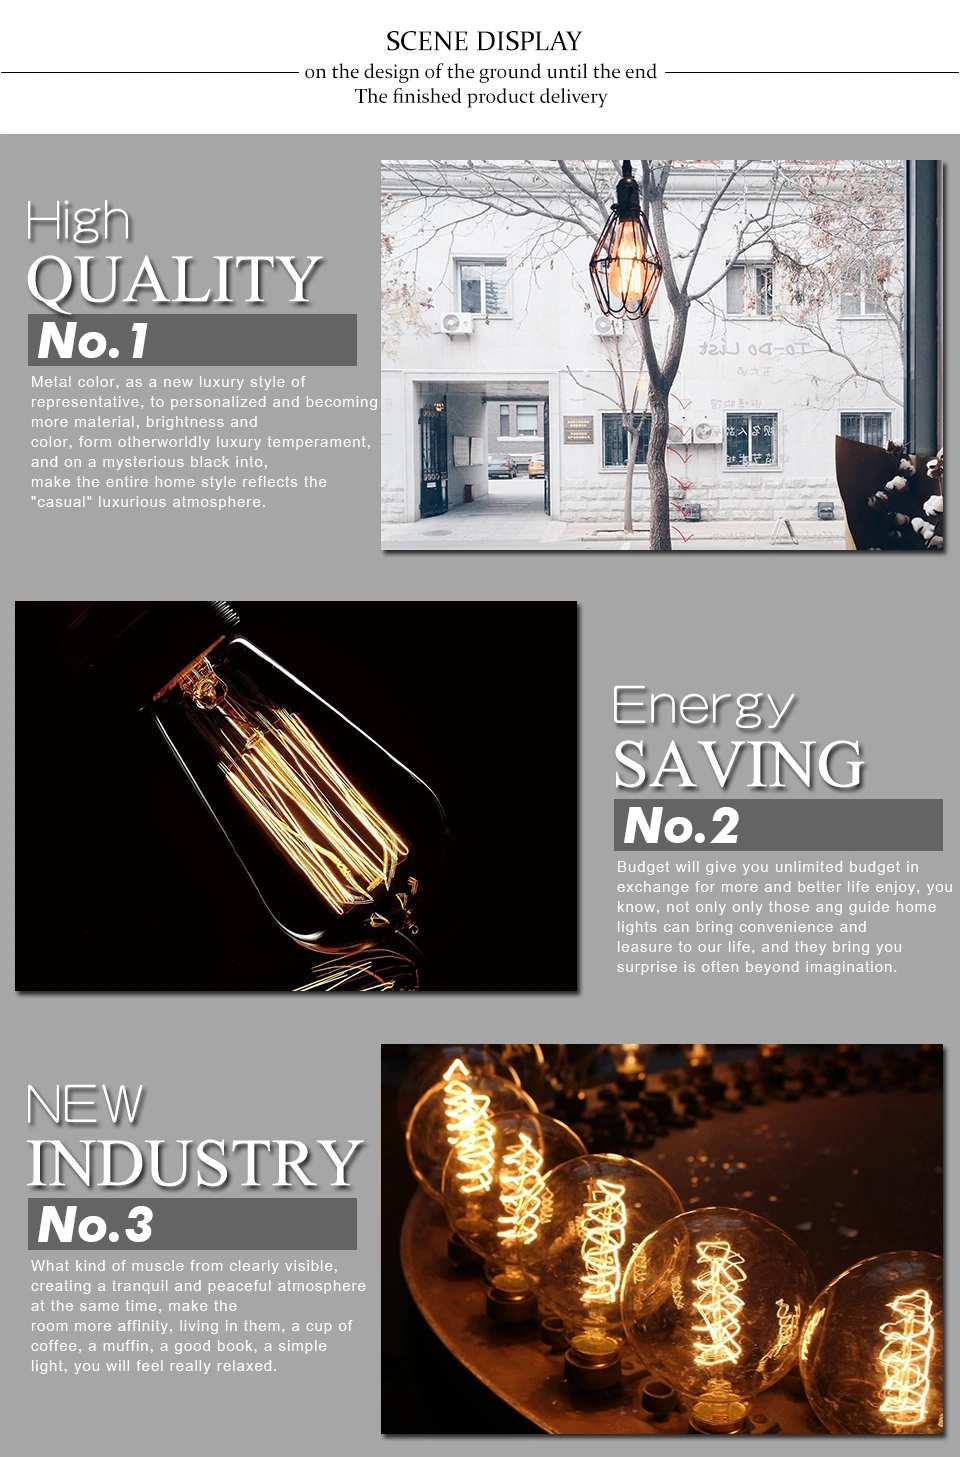 40W E27 Transparent LED Filament Bulb AC 220V Retro Vintage Warm White Incandescent Lamps Home Decor Glass Bulbs Light